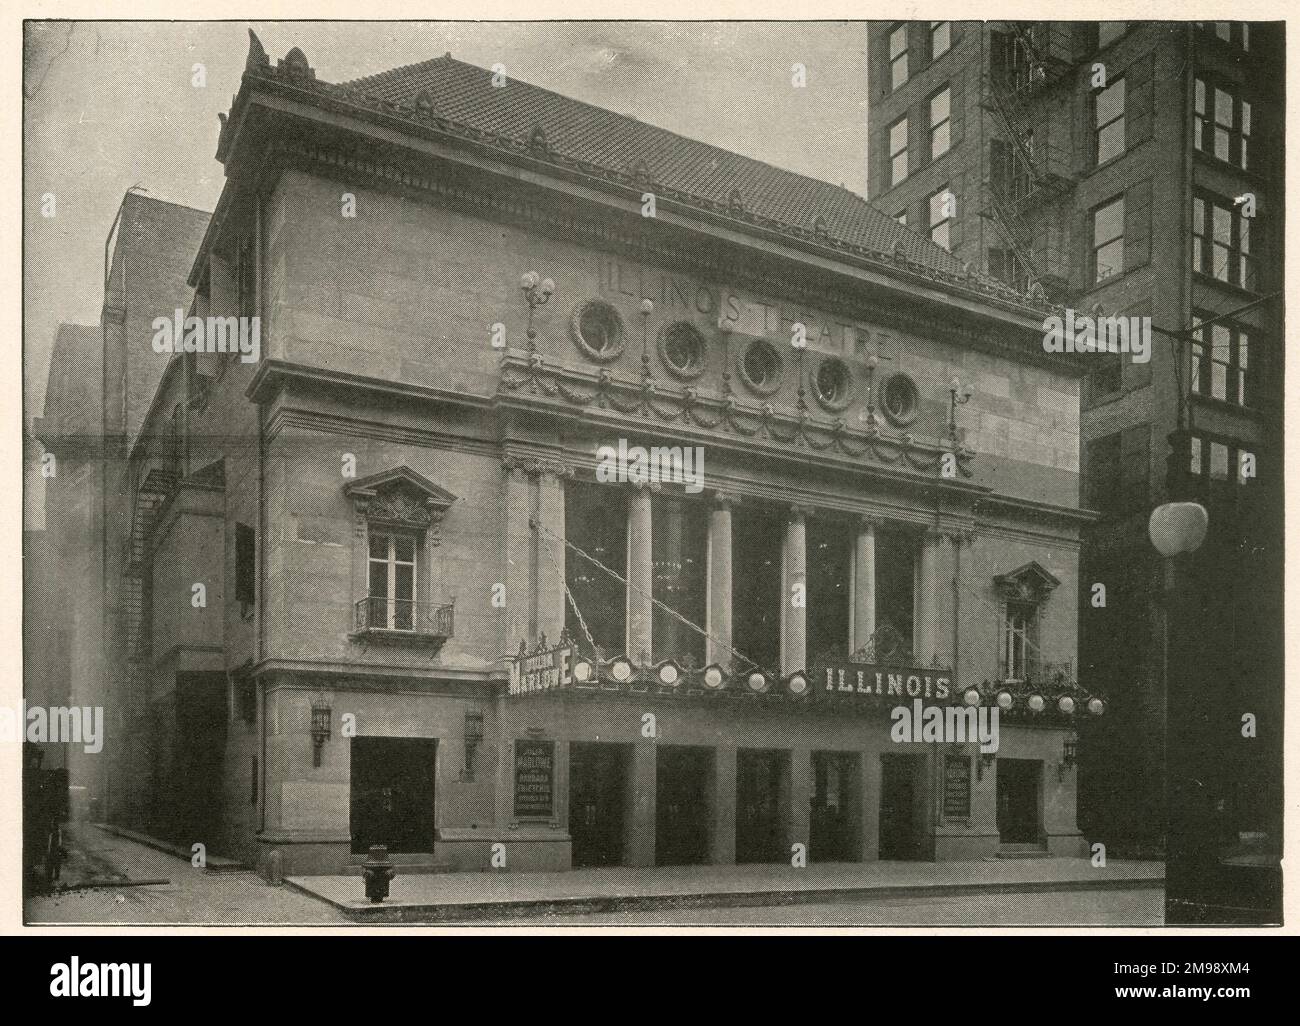 Illinois Theatre, Chicago, Illinois, USA. Stockfoto